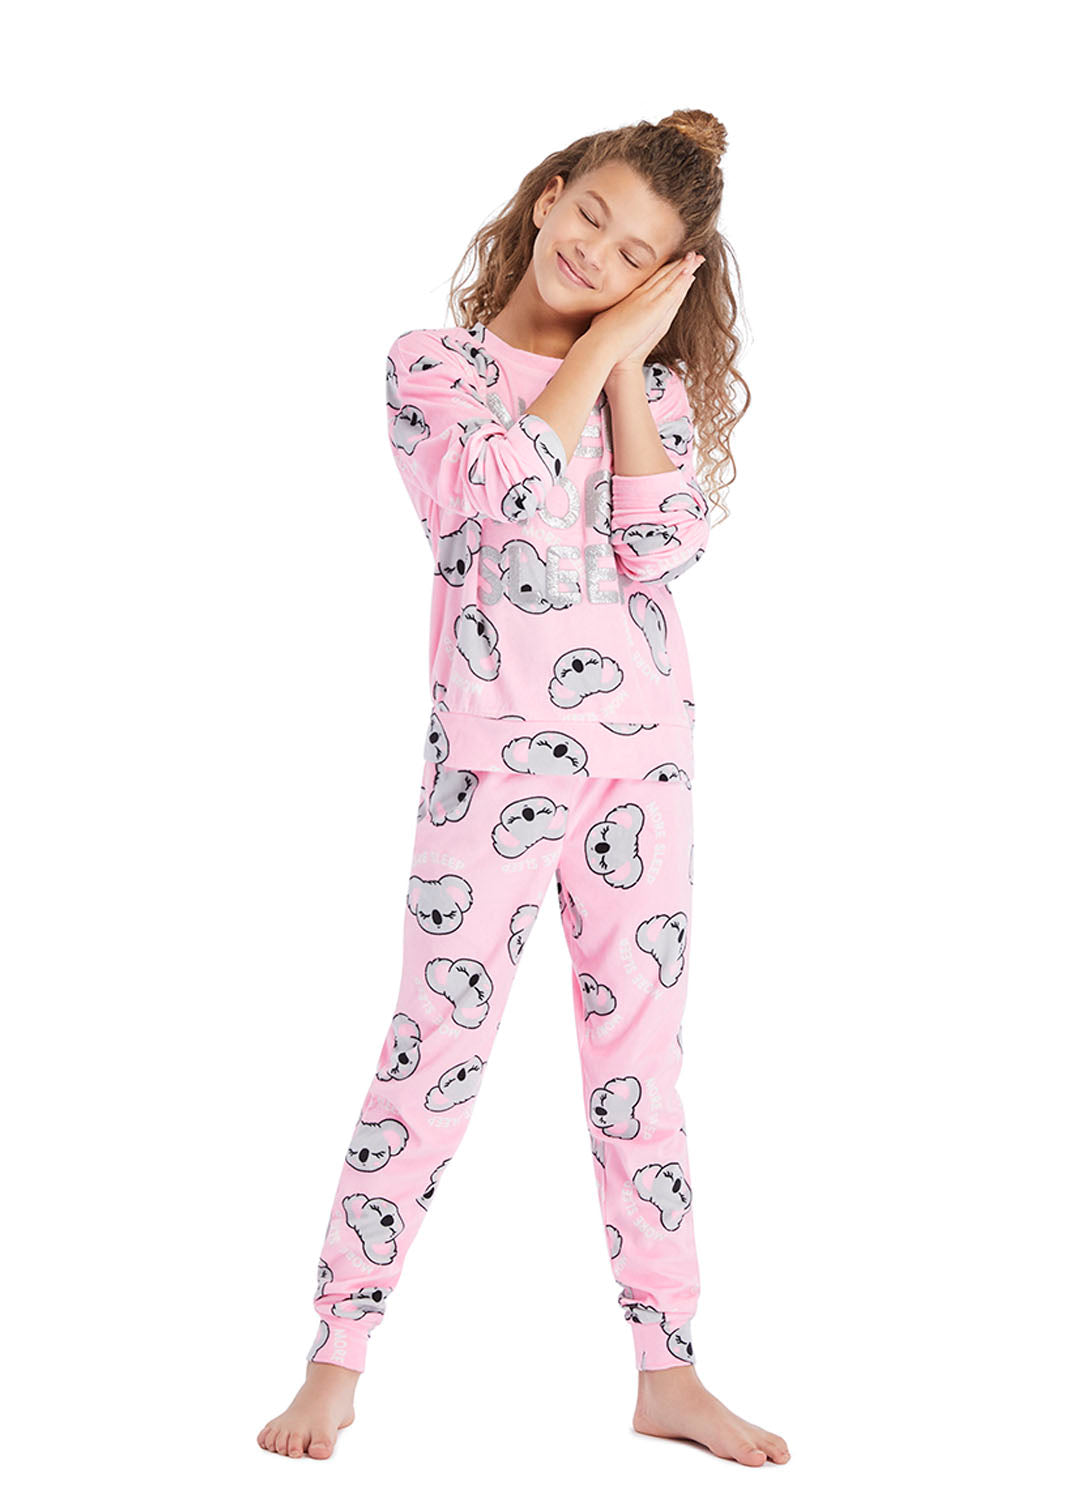 Girl sleeping and wearing Pajama Set with Pink Koala Print